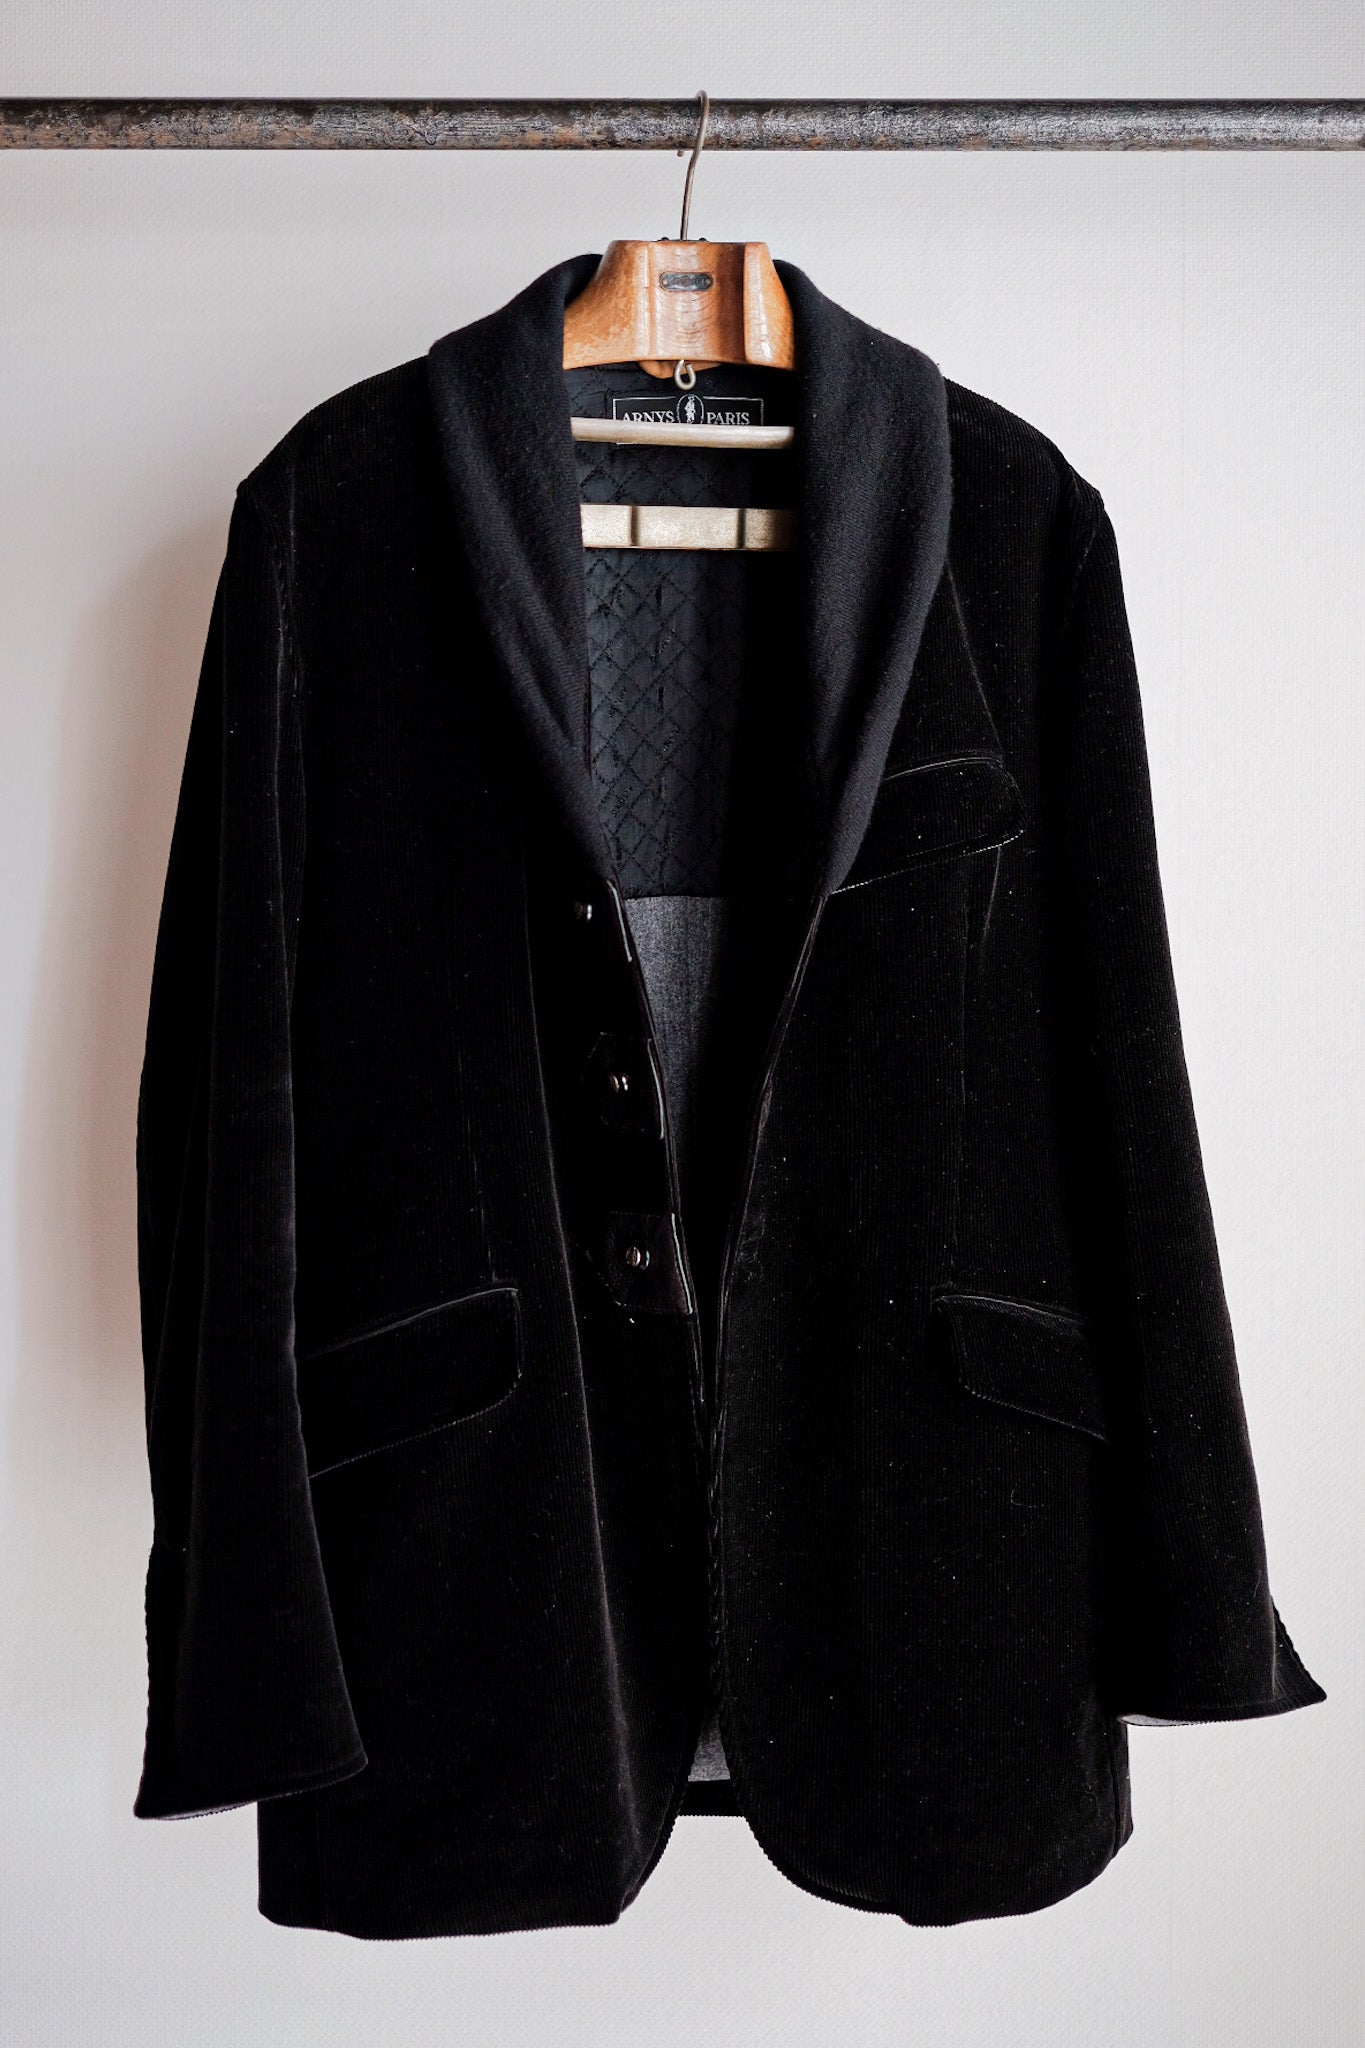 【~00's】ARNYS PARIS Saint Germain Jacket Size.52